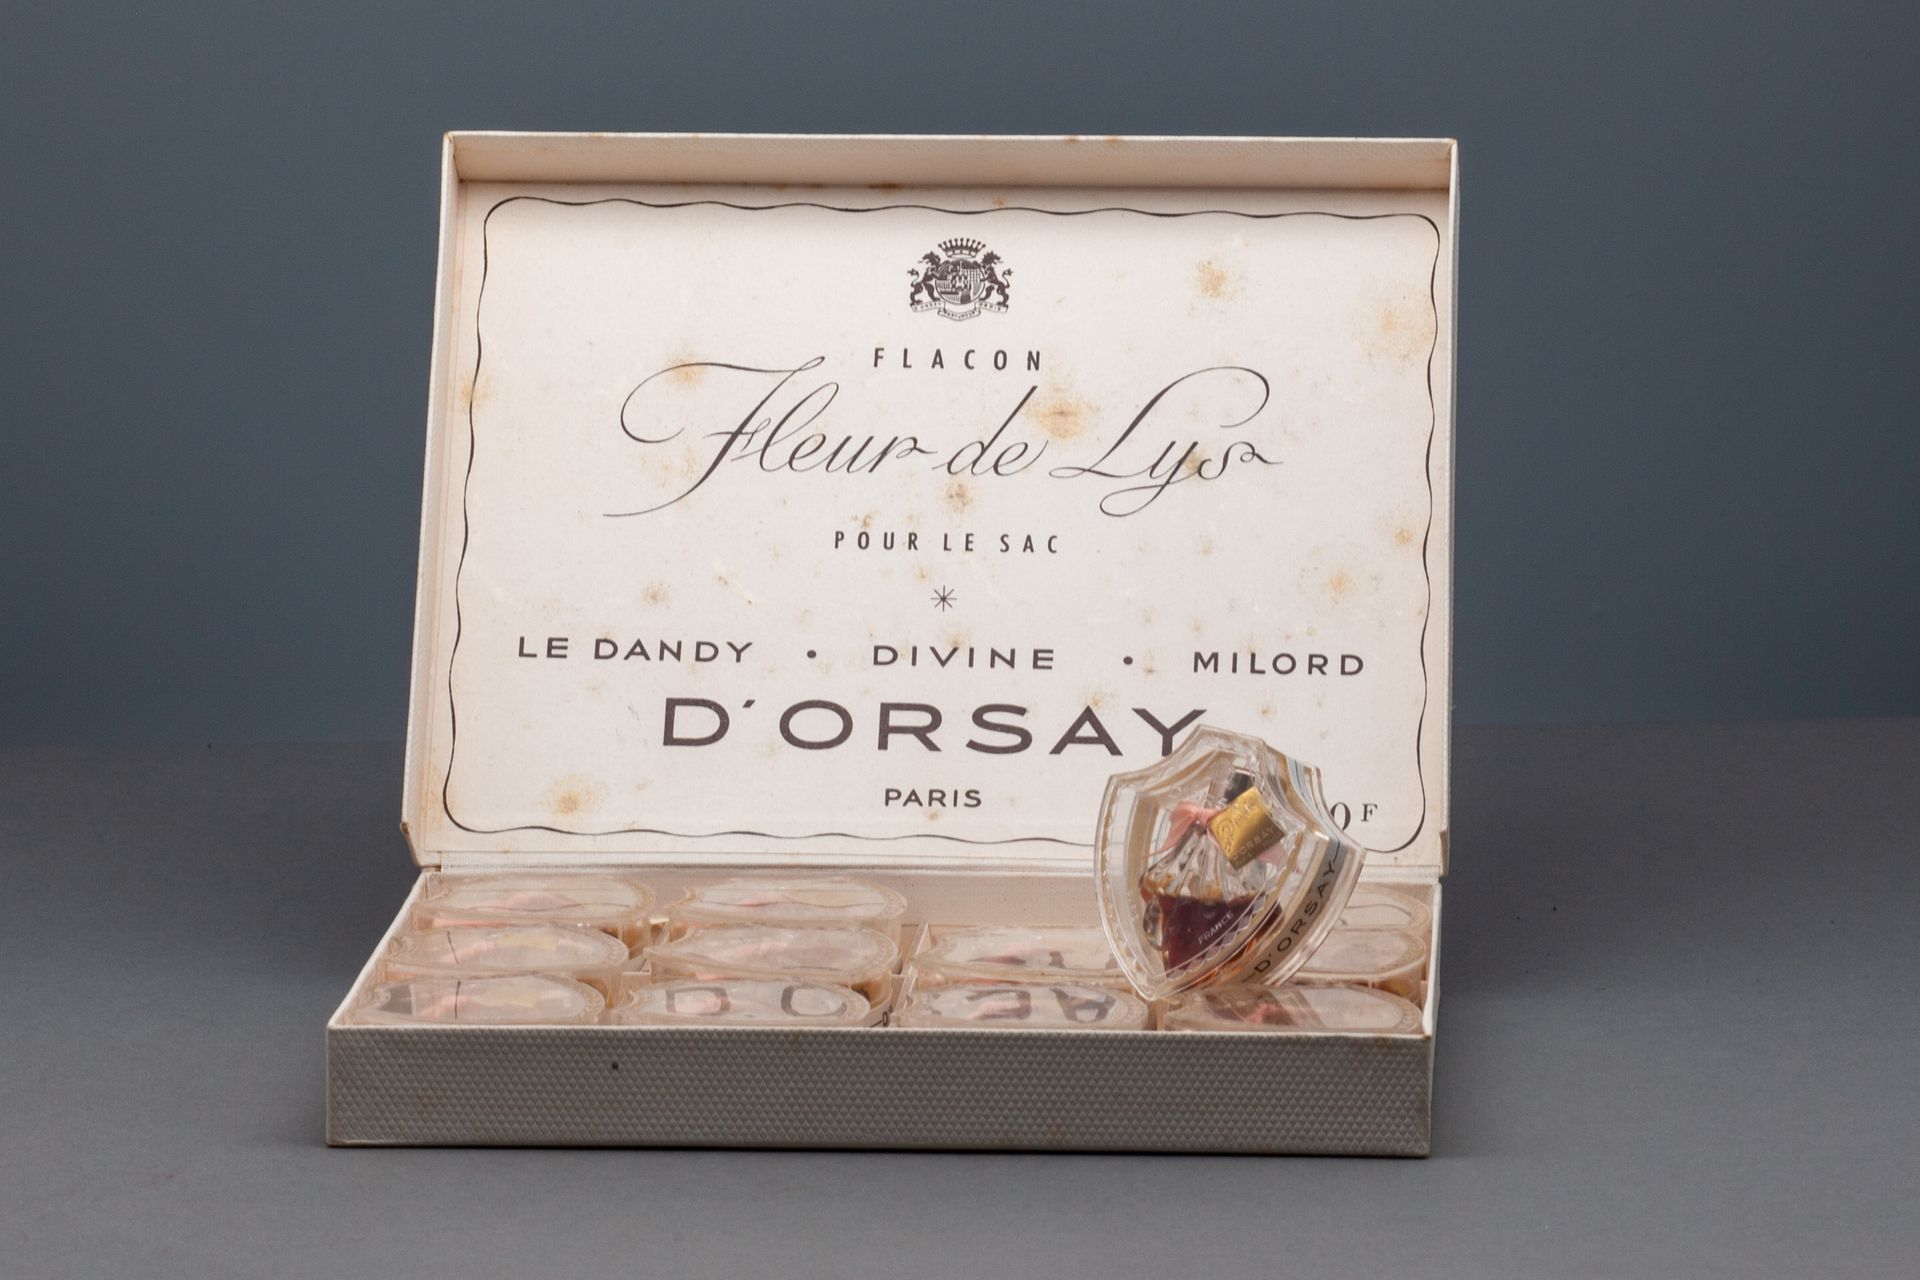 D'ORSAY "FLEURS DE LYS" 展示盒里有12瓶 "Divine "香水，装在密封的盒子里。盒子大小为14x14厘米